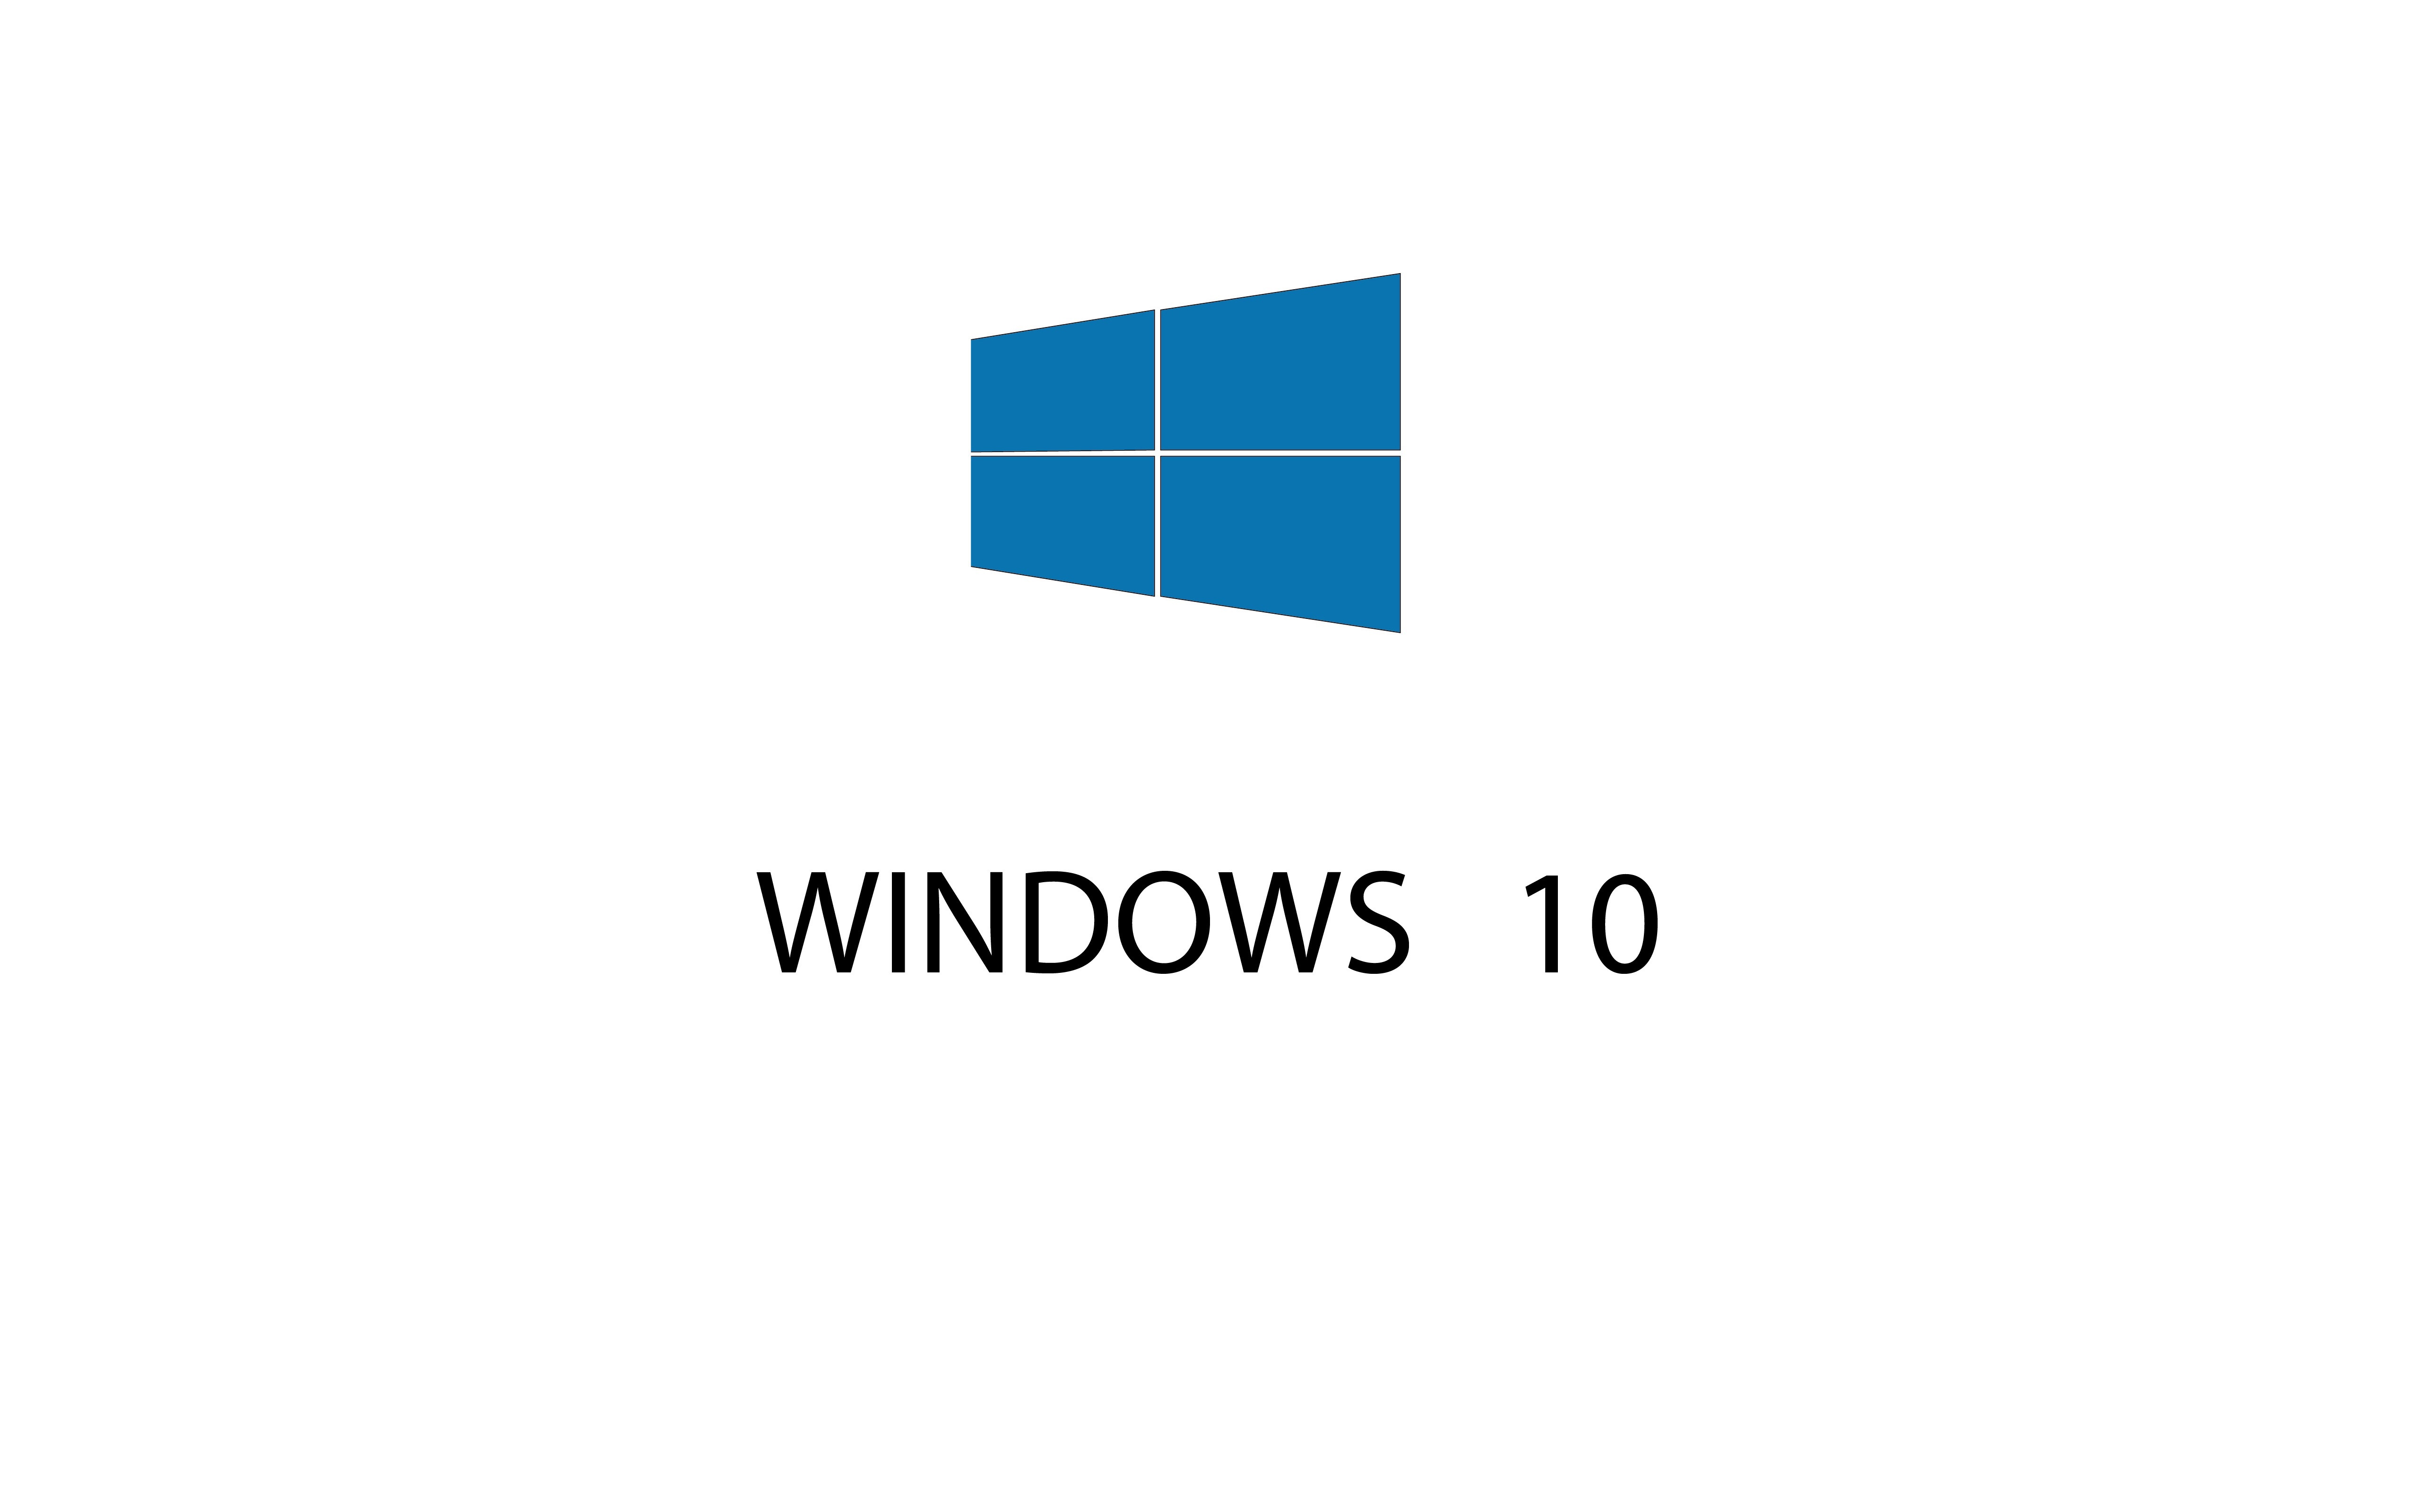 Loading windows 10. Виндовс 10 лого. Логотип Windows. Windows 10 обложка. Значок Windows.